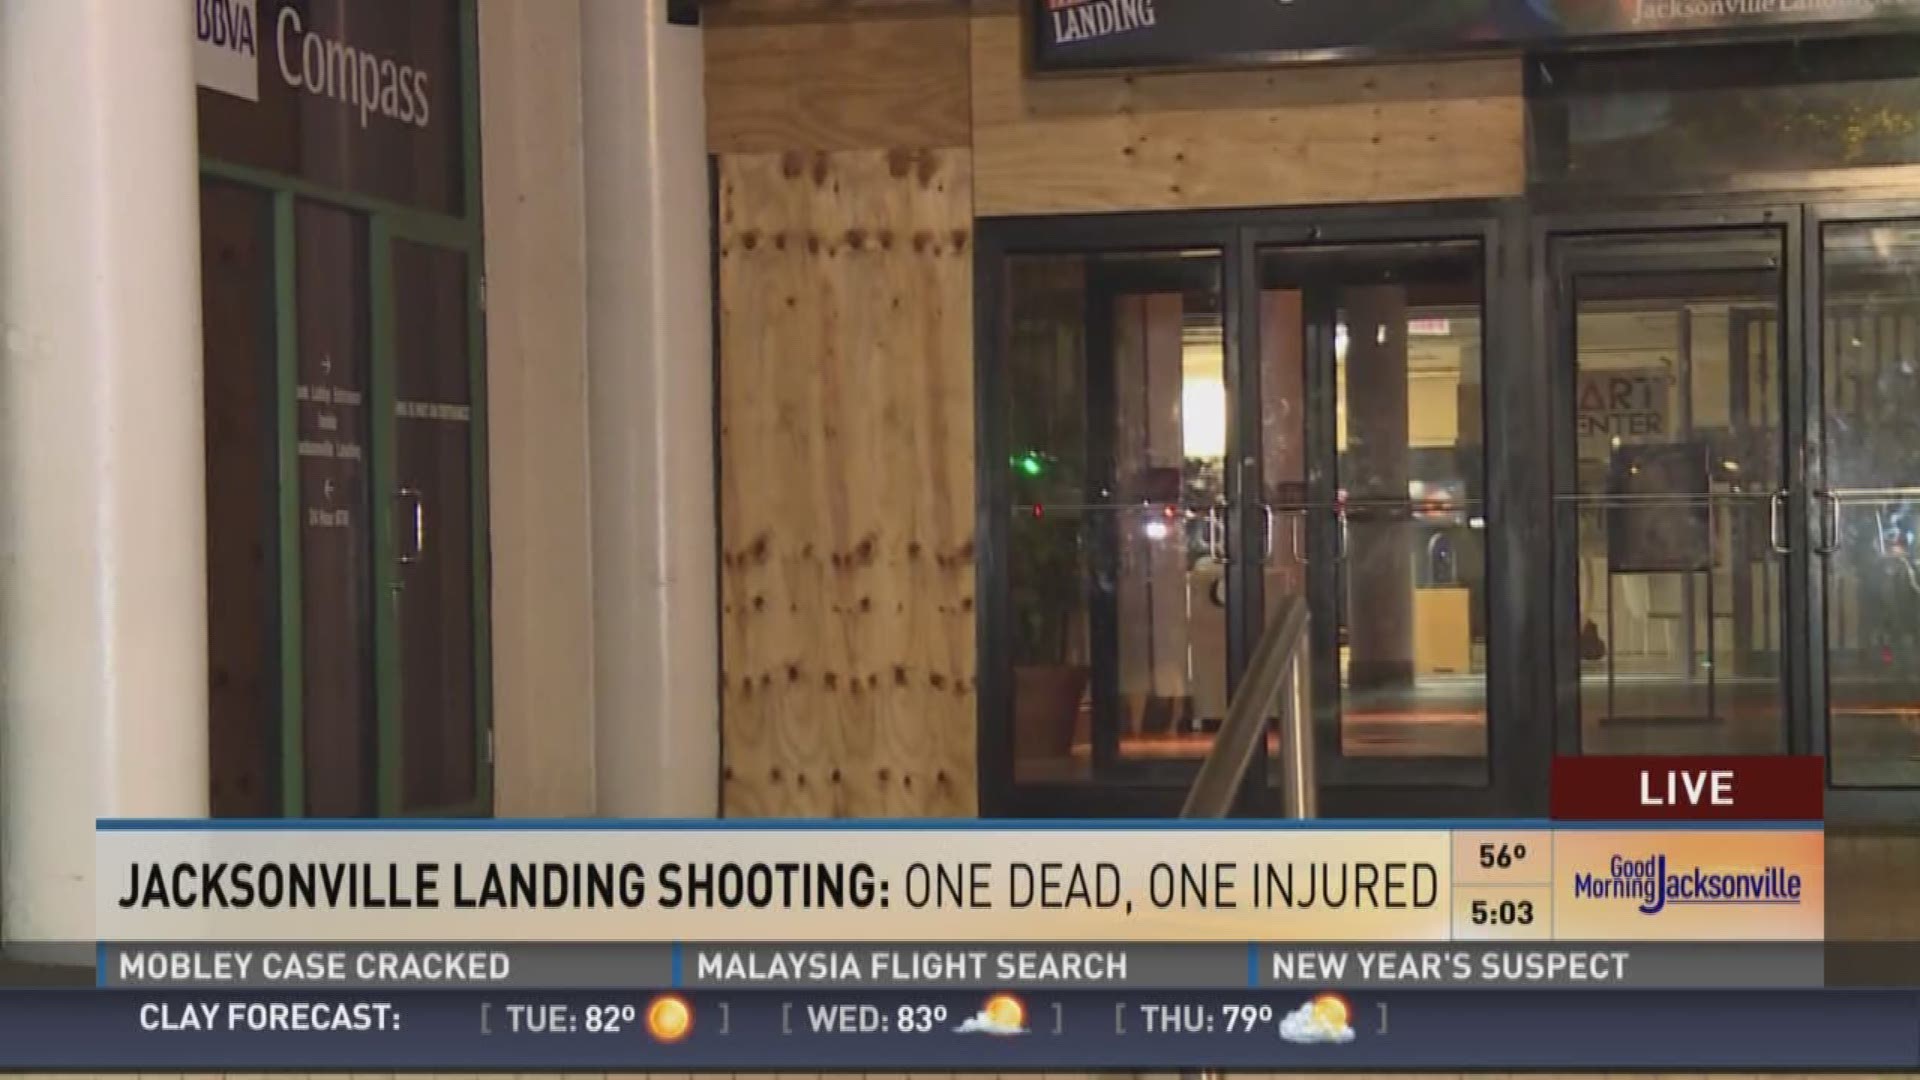 Jacksonville landing shooting: One dead, one injured